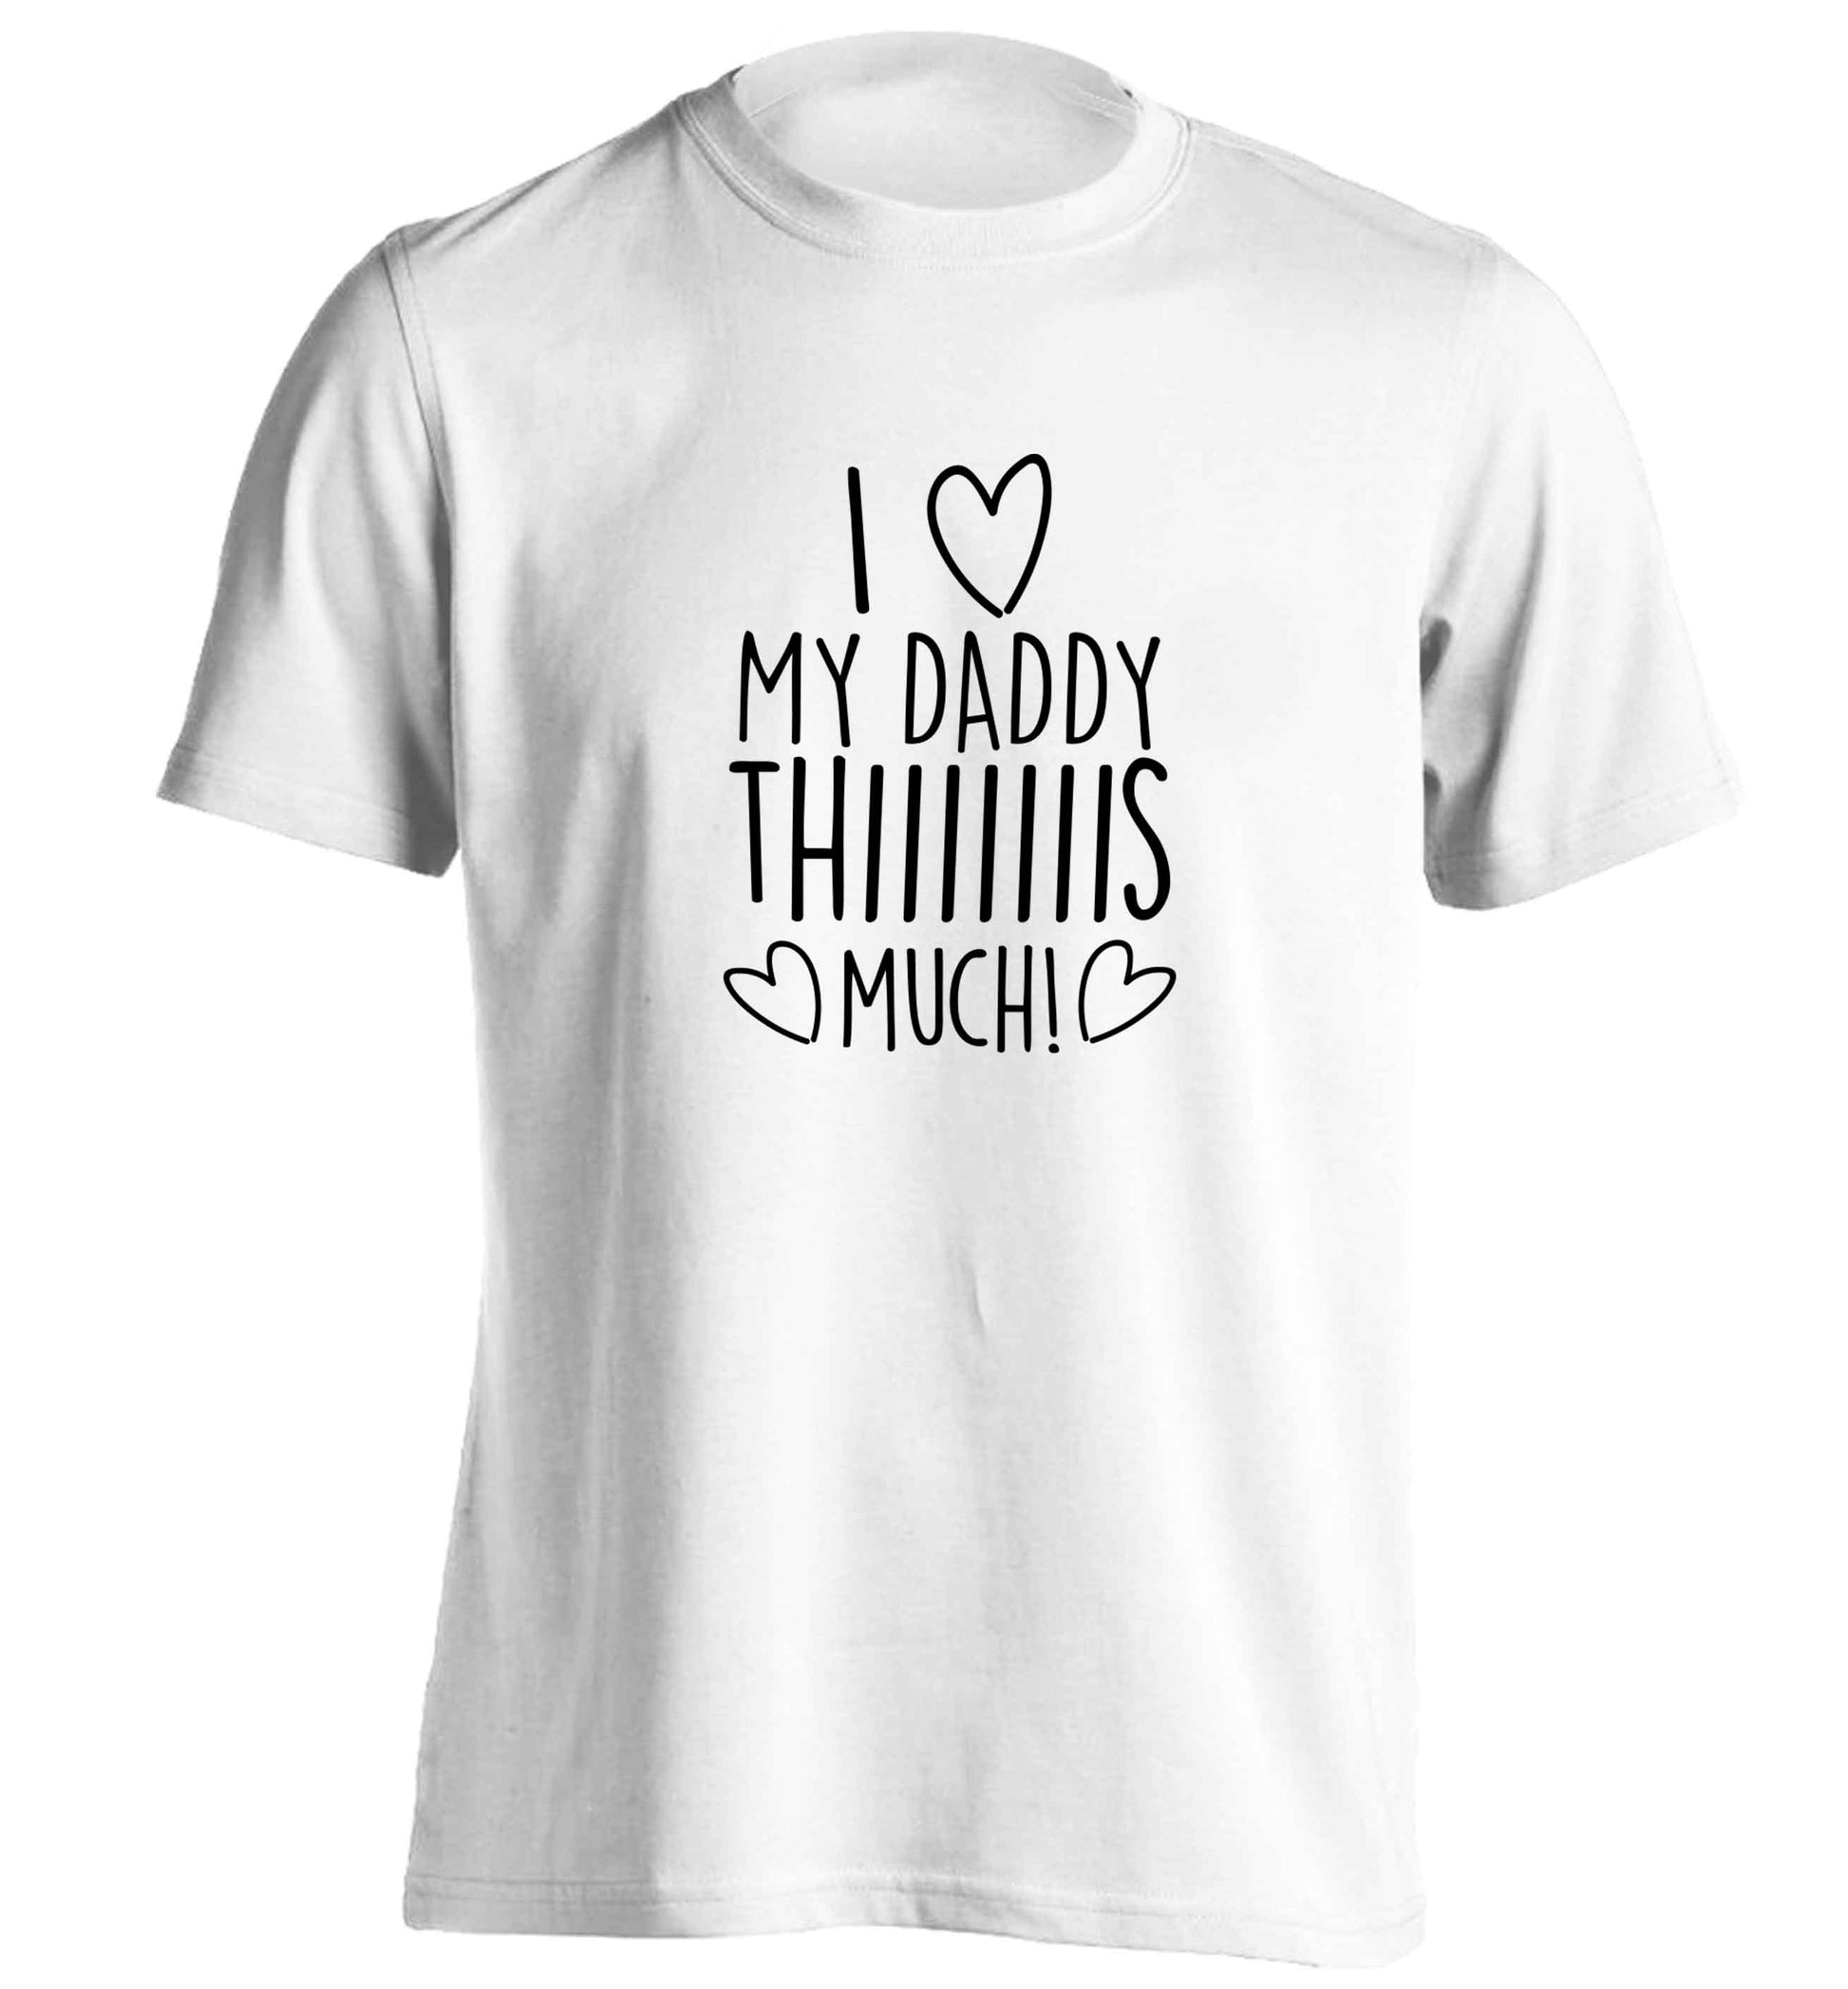 I love my daddy thiiiiis much! adults unisex white Tshirt 2XL